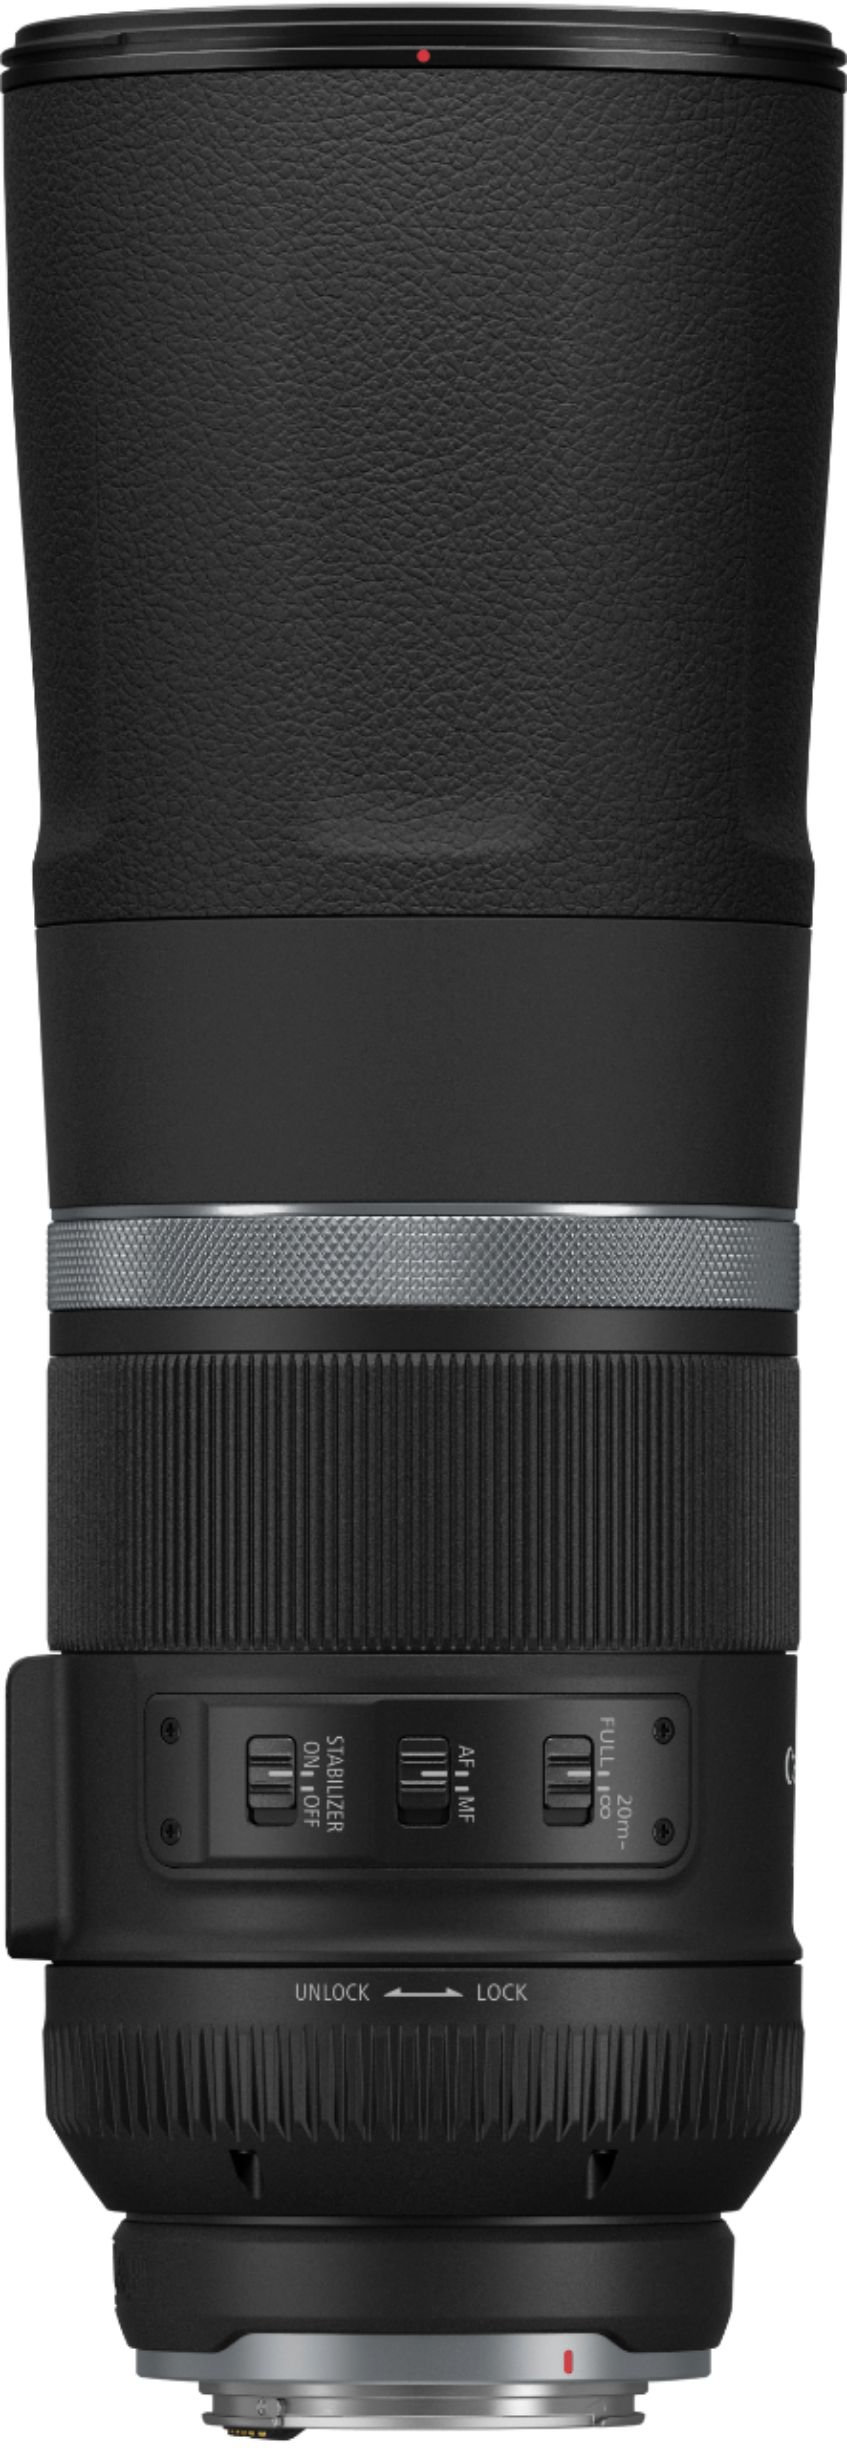 Back View: Sony - 35mm f/1.8 Prime Lens for Most NEX E-Mount Cameras - Black